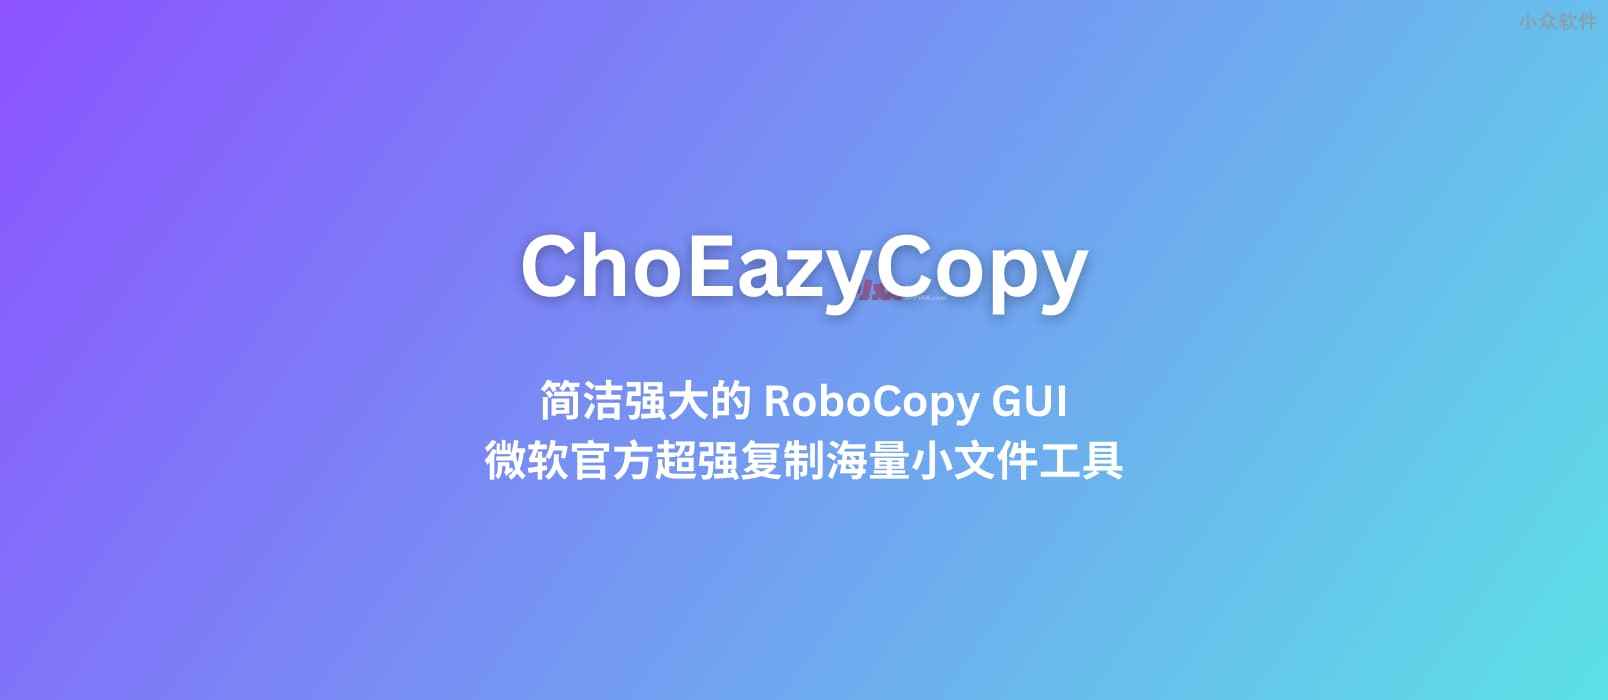 ChoEazyCopy, 简洁强大的 RoboCopy GUI，微软官方超强复制海量小文件工具的图形界面版本